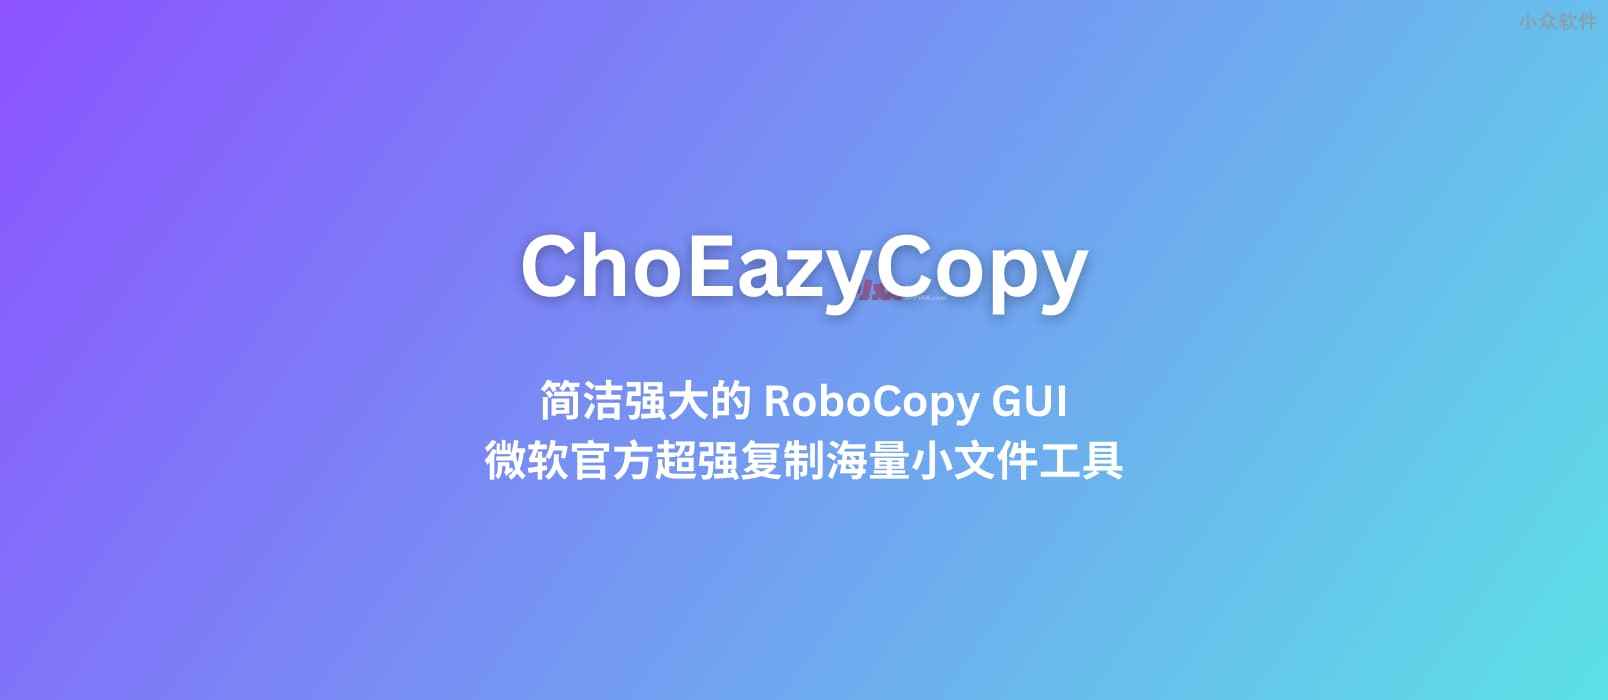 ChoEazyCopy, 简洁强大的 RoboCopy GUI，微软官方超强复制海量小文件工具的图形界面版本